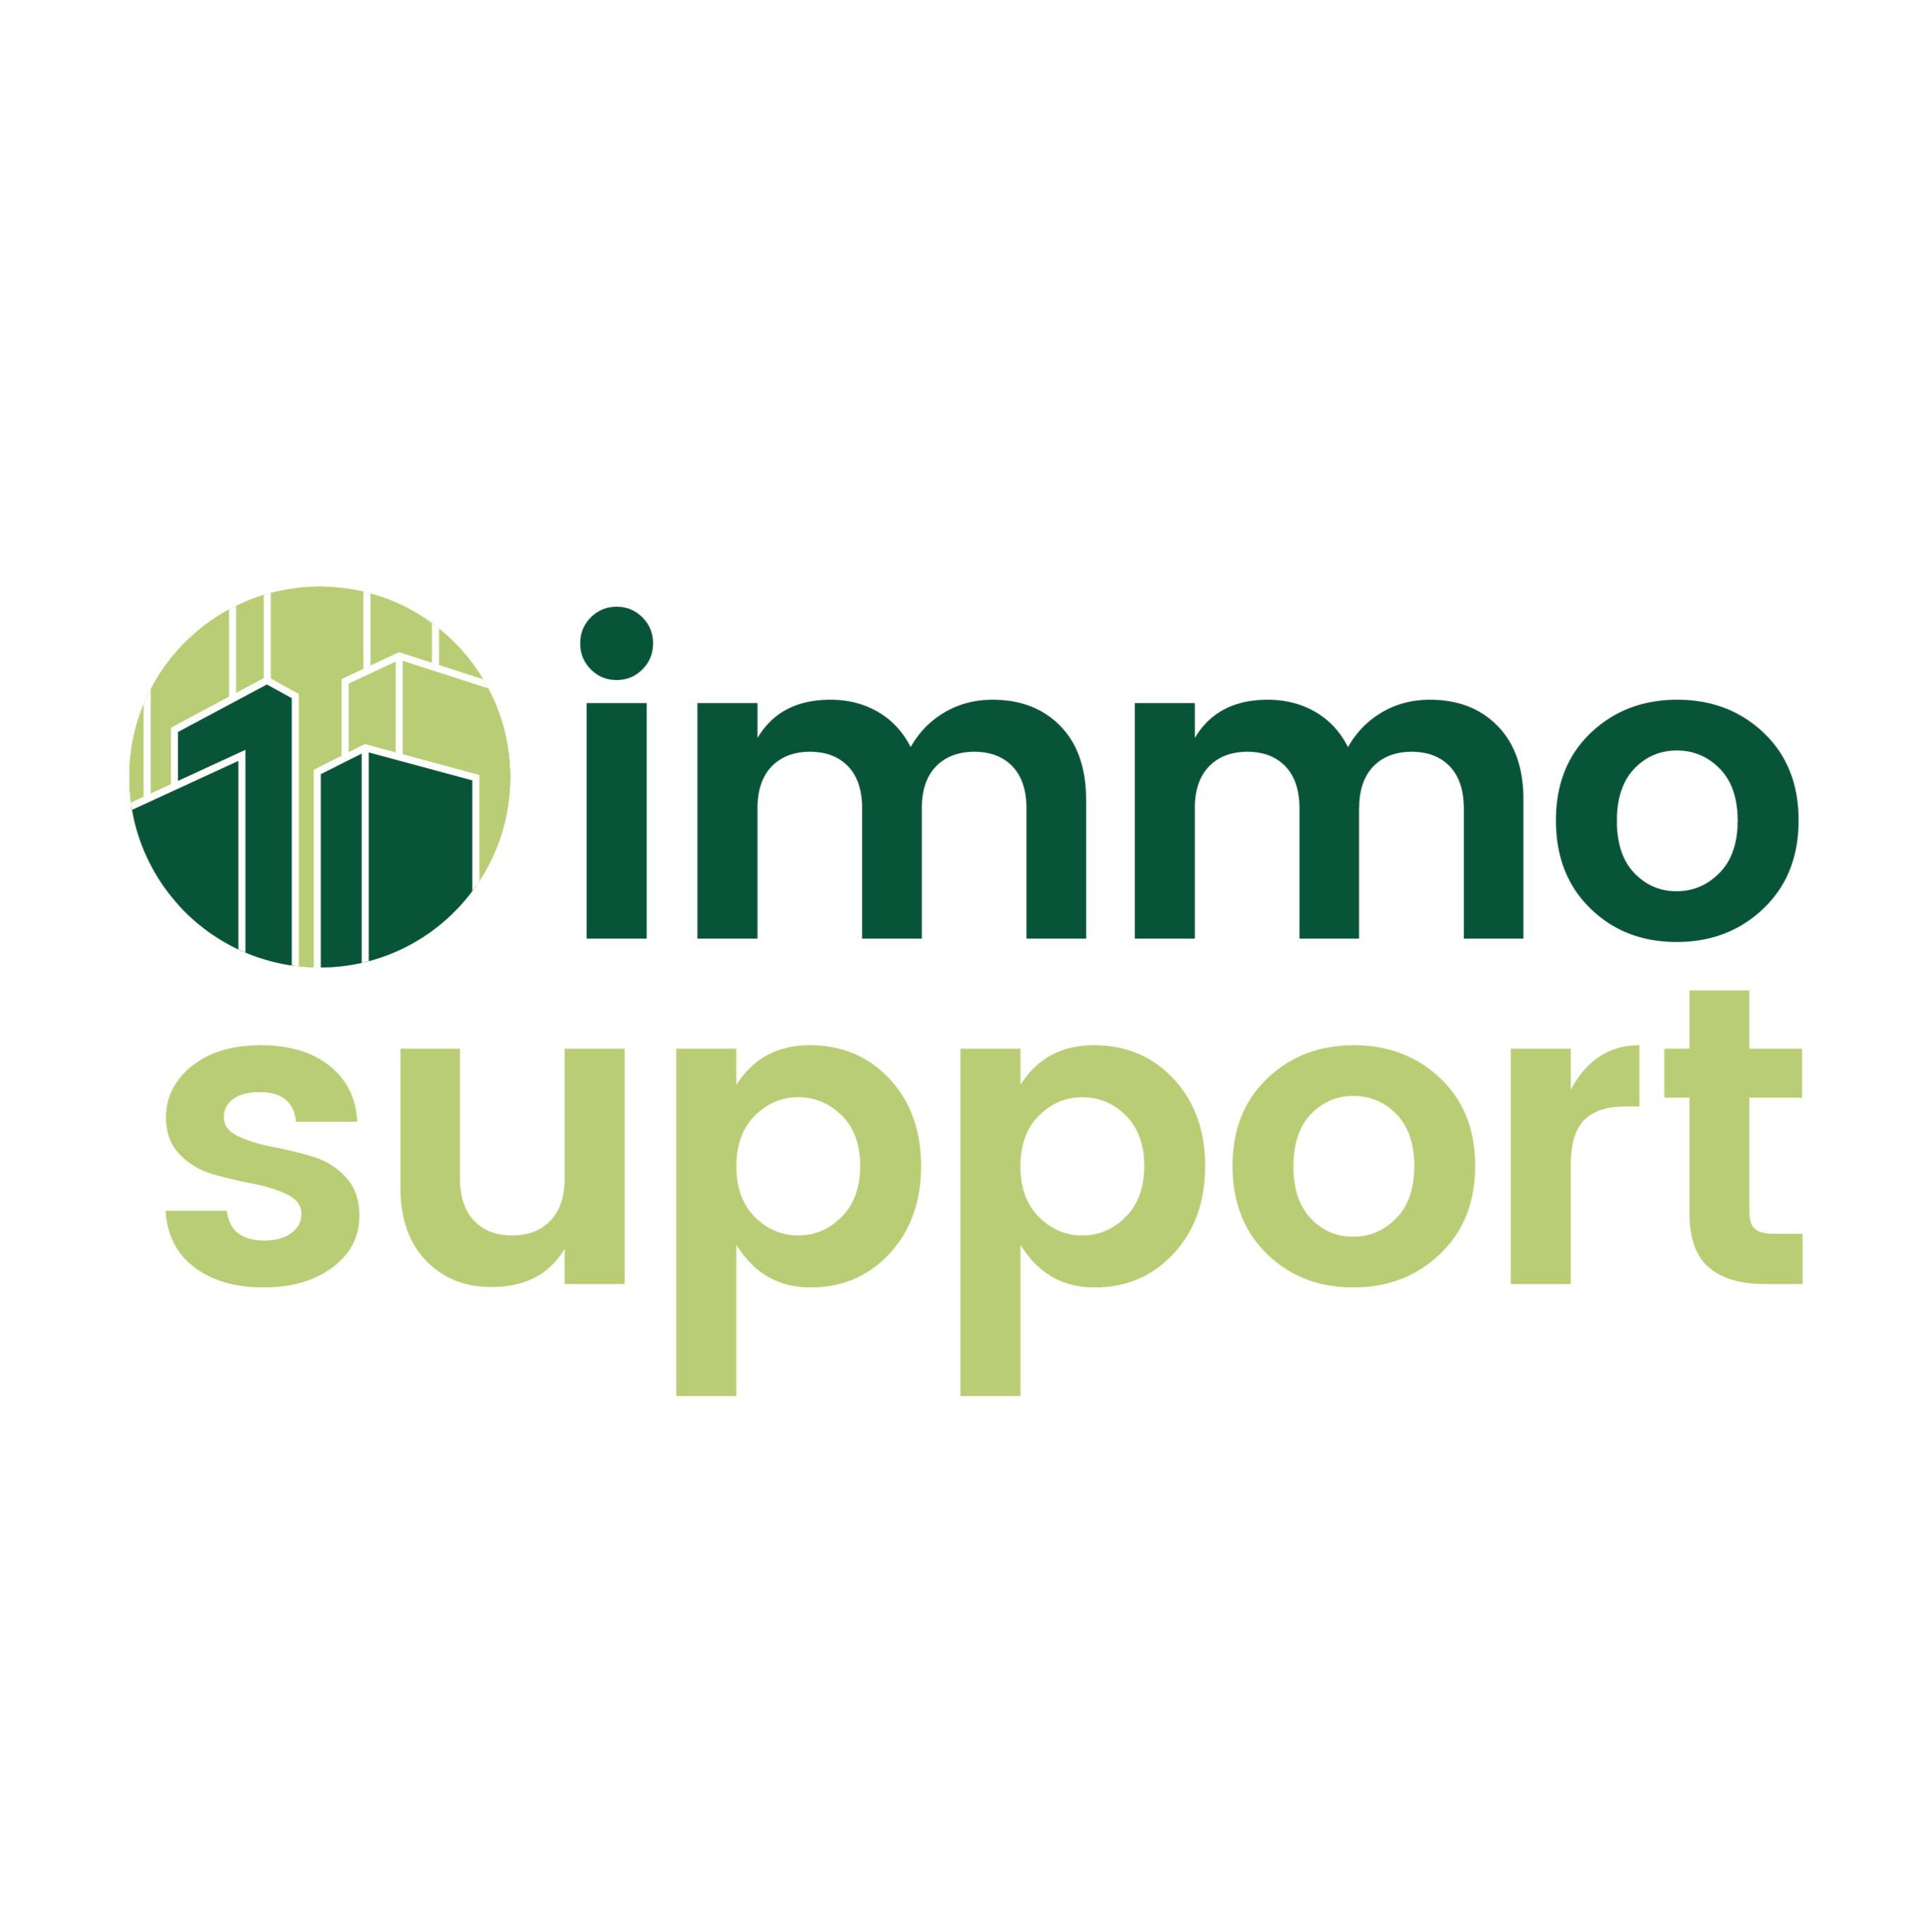 immosupport GmbH Logo